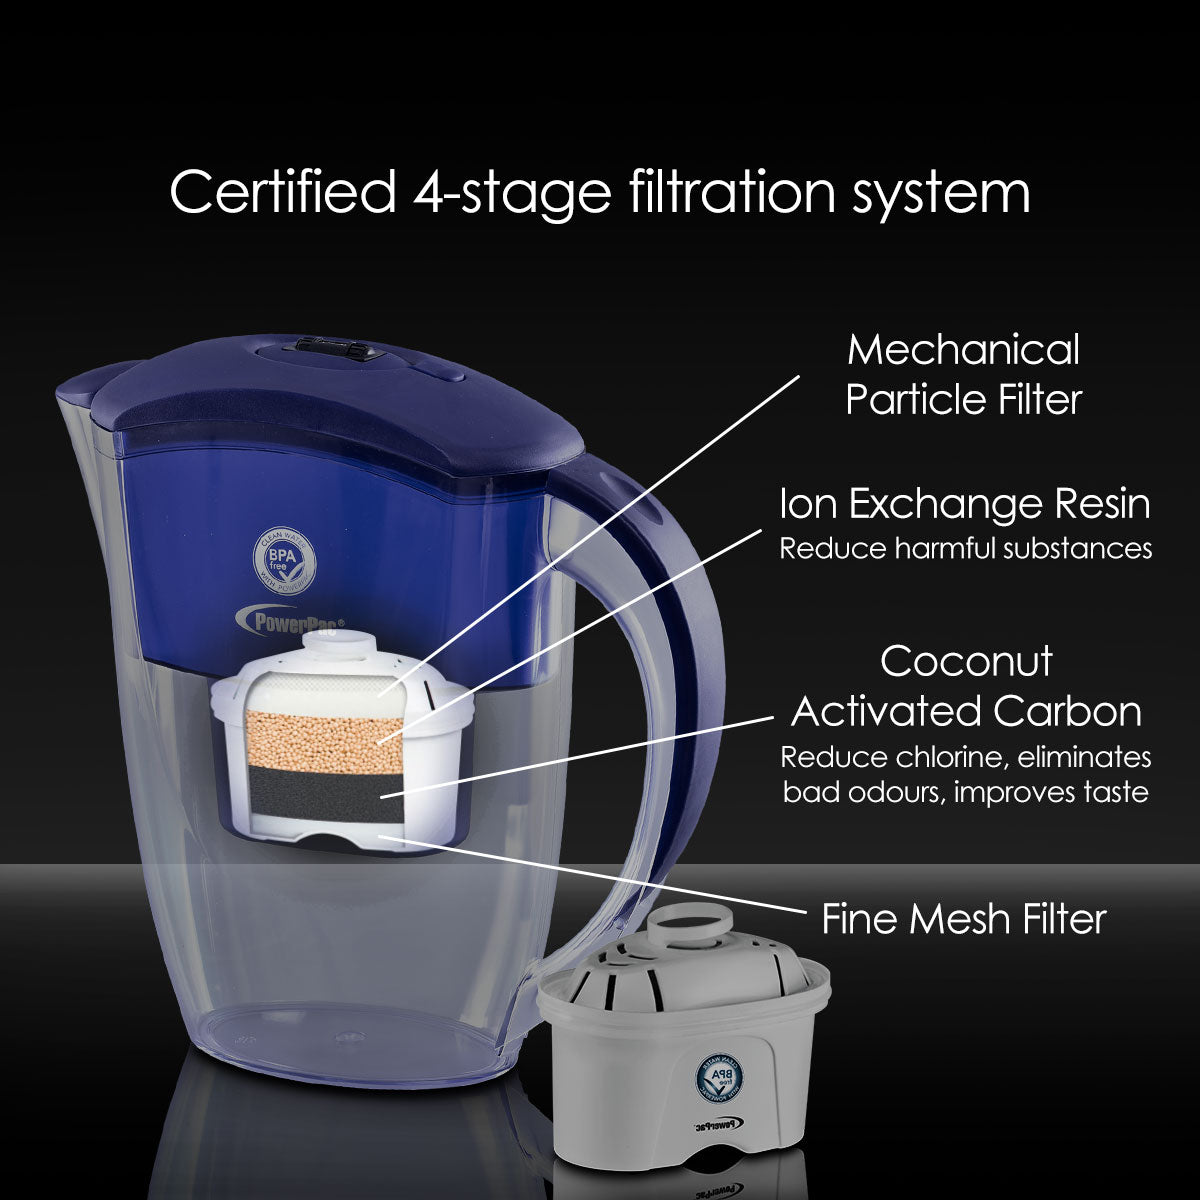 Water Filter Pitcher, Water Purifier Filter (PP1518)